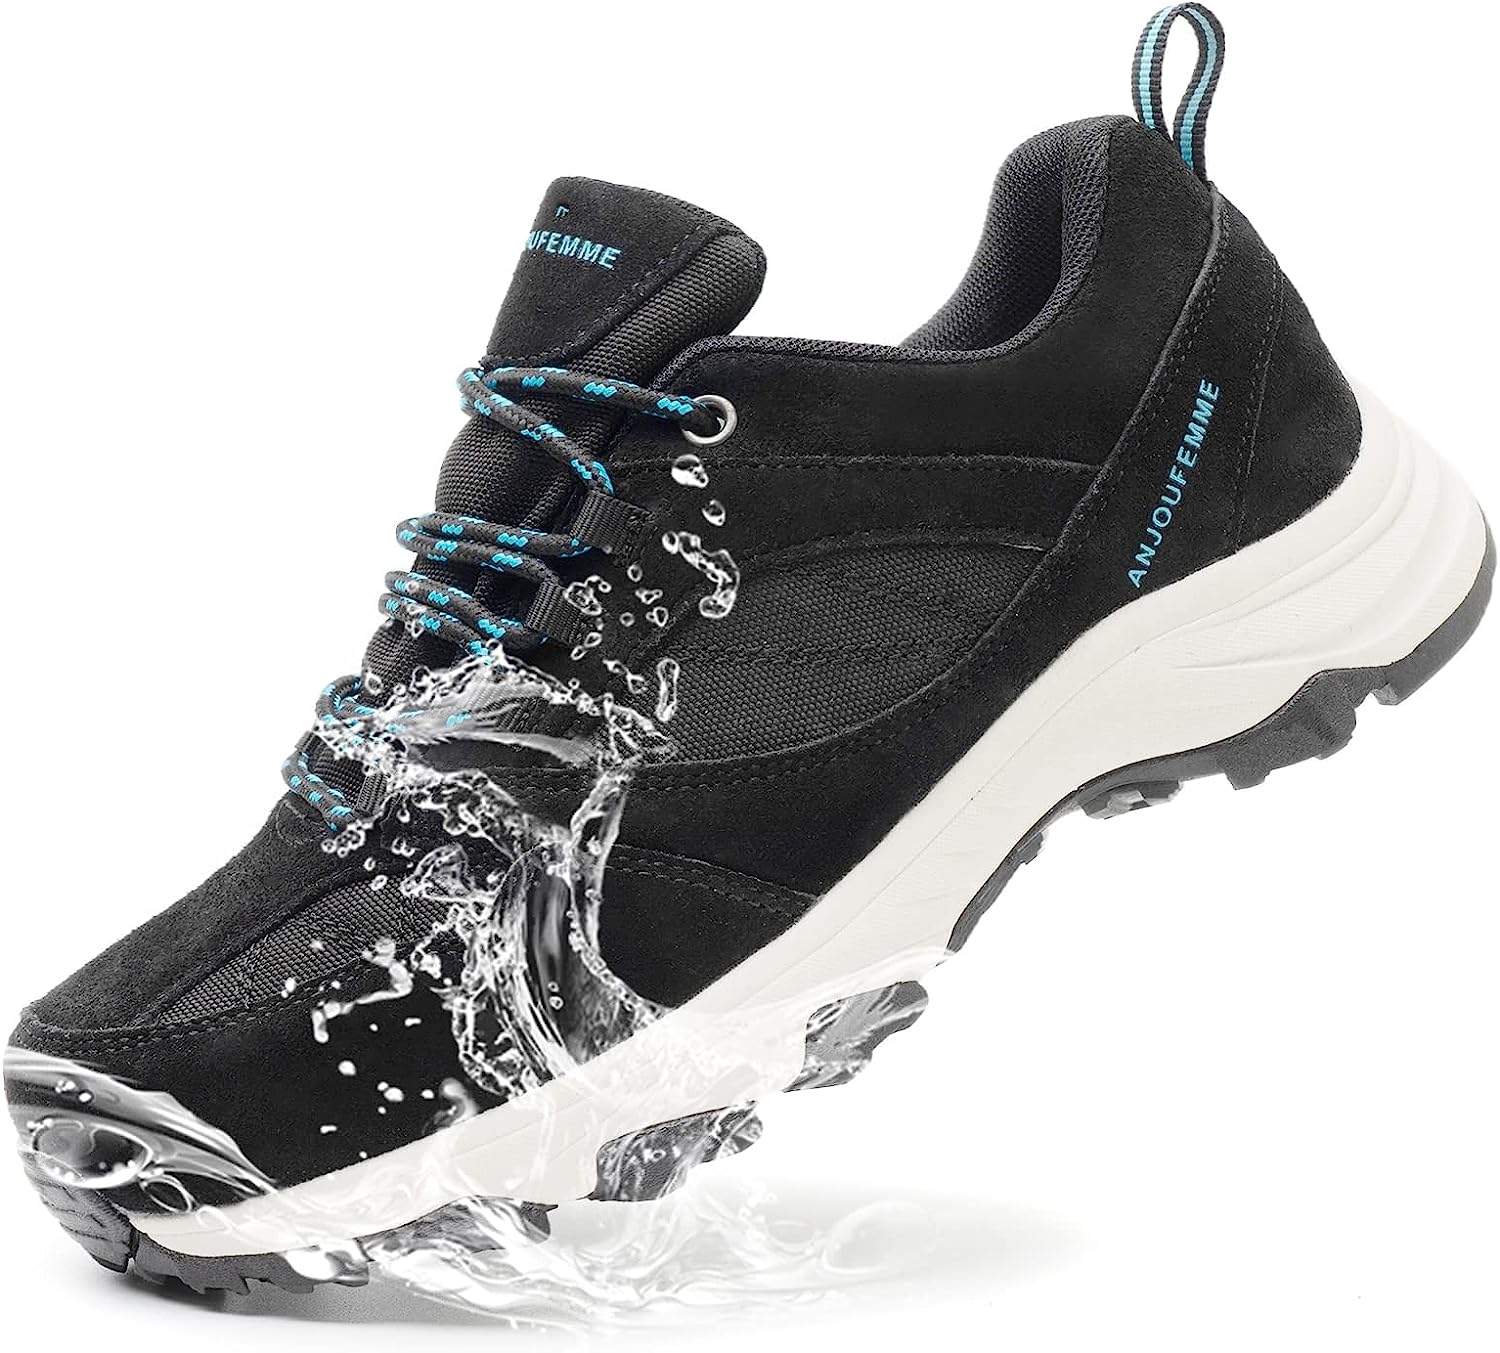 ANJOUFEMME Women's Hiking Shoes Waterproof Outdoor [...]